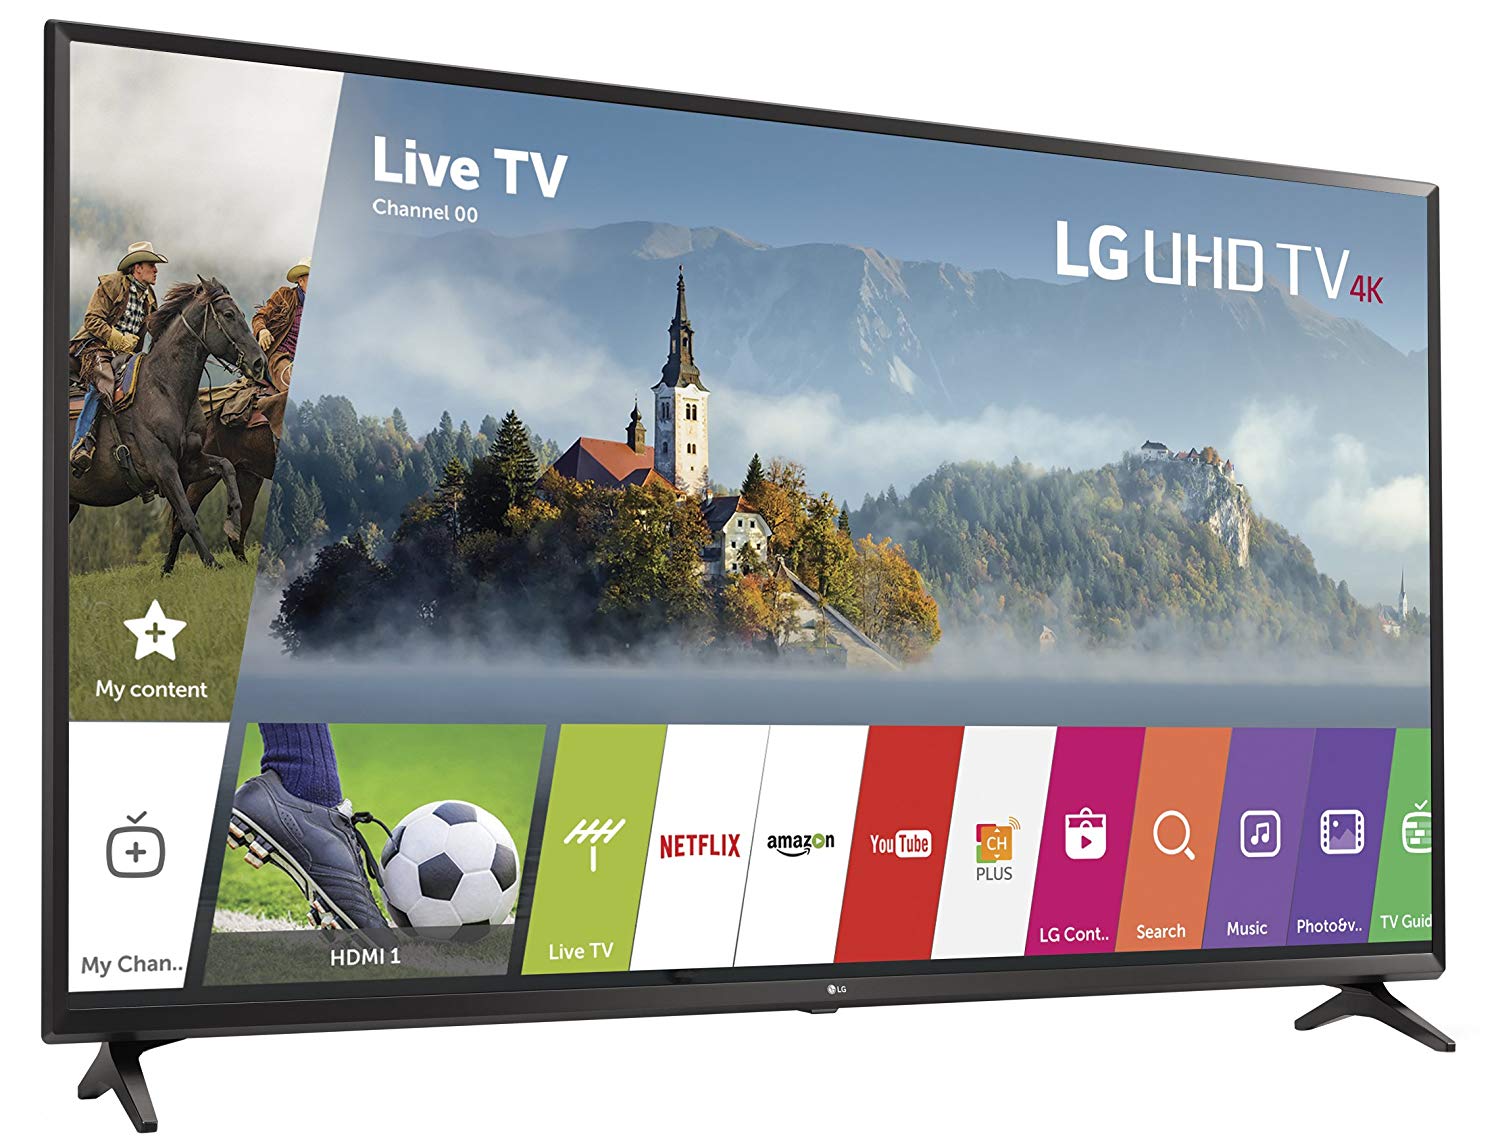 LG Электроника 65UJ6300 65-дюймовый Smart LED TV 4K Ultra HD (модель 2017 г.)